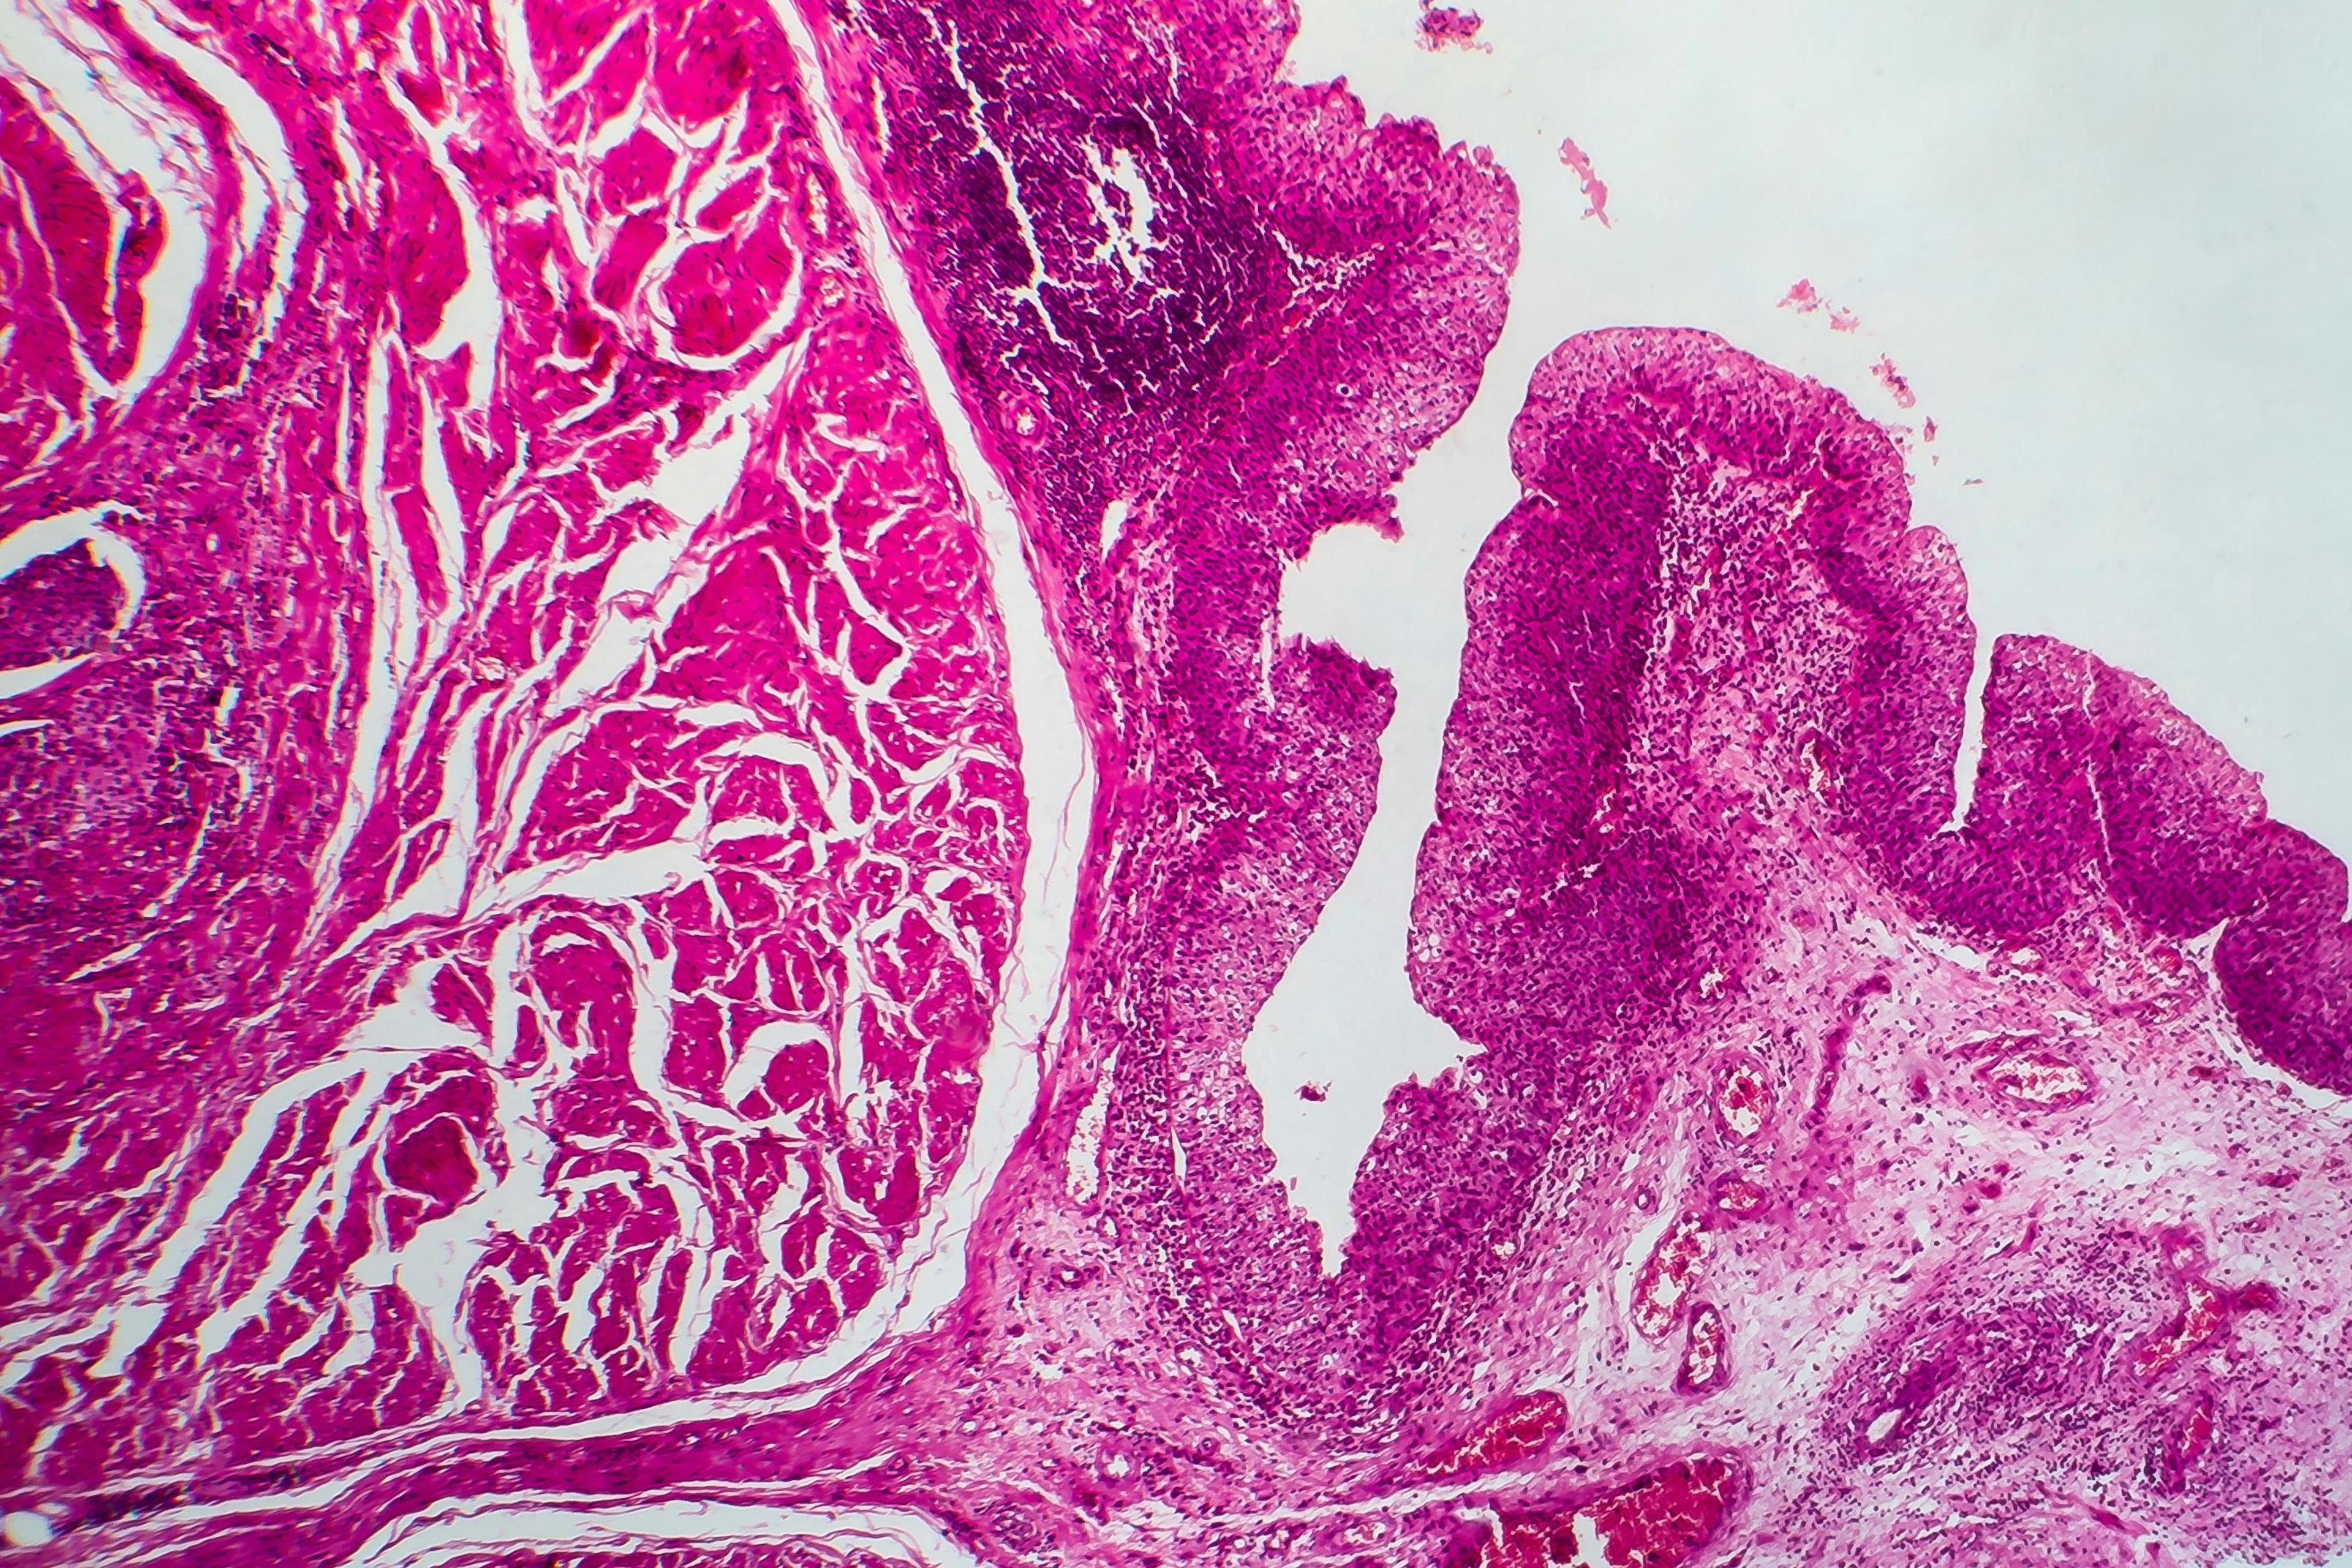 Bladder cancer, light micrograph, photo under microscope | Image Credit: © Dr_Microbe - www.stock.adobe.com